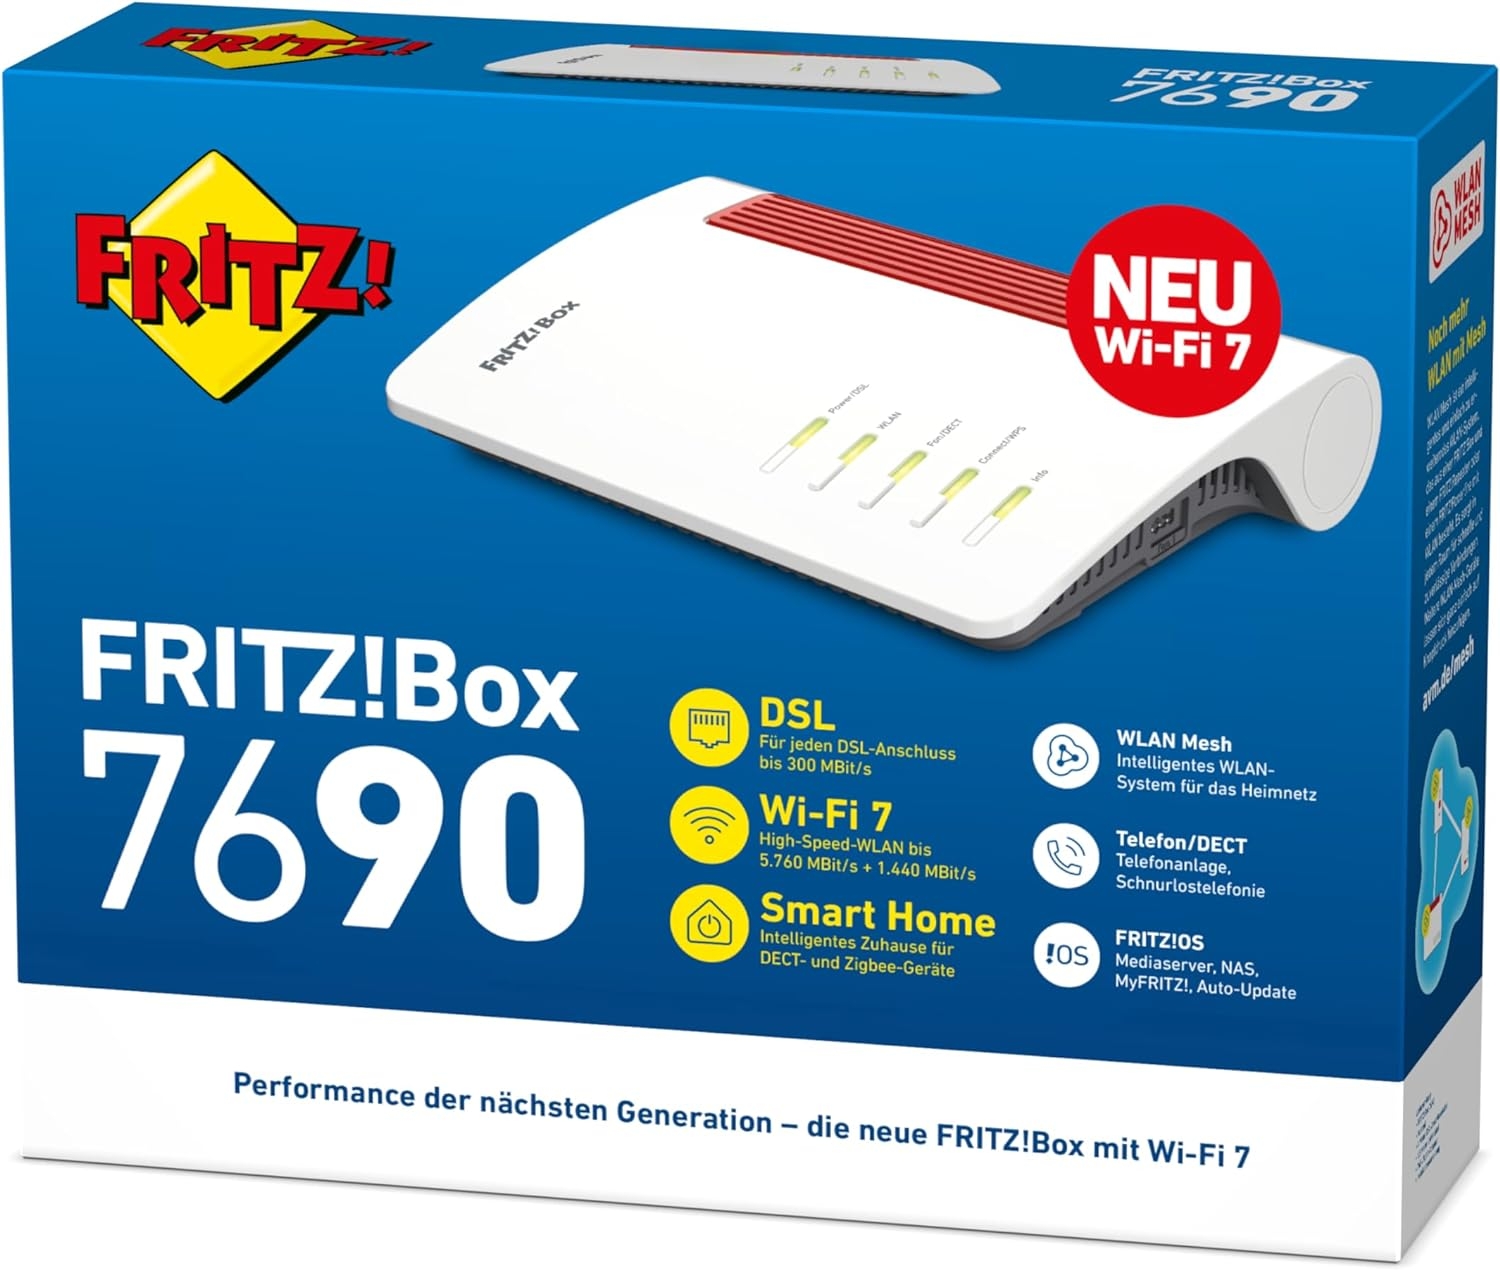 AVM FRITZ!Box 7690 WiFi7